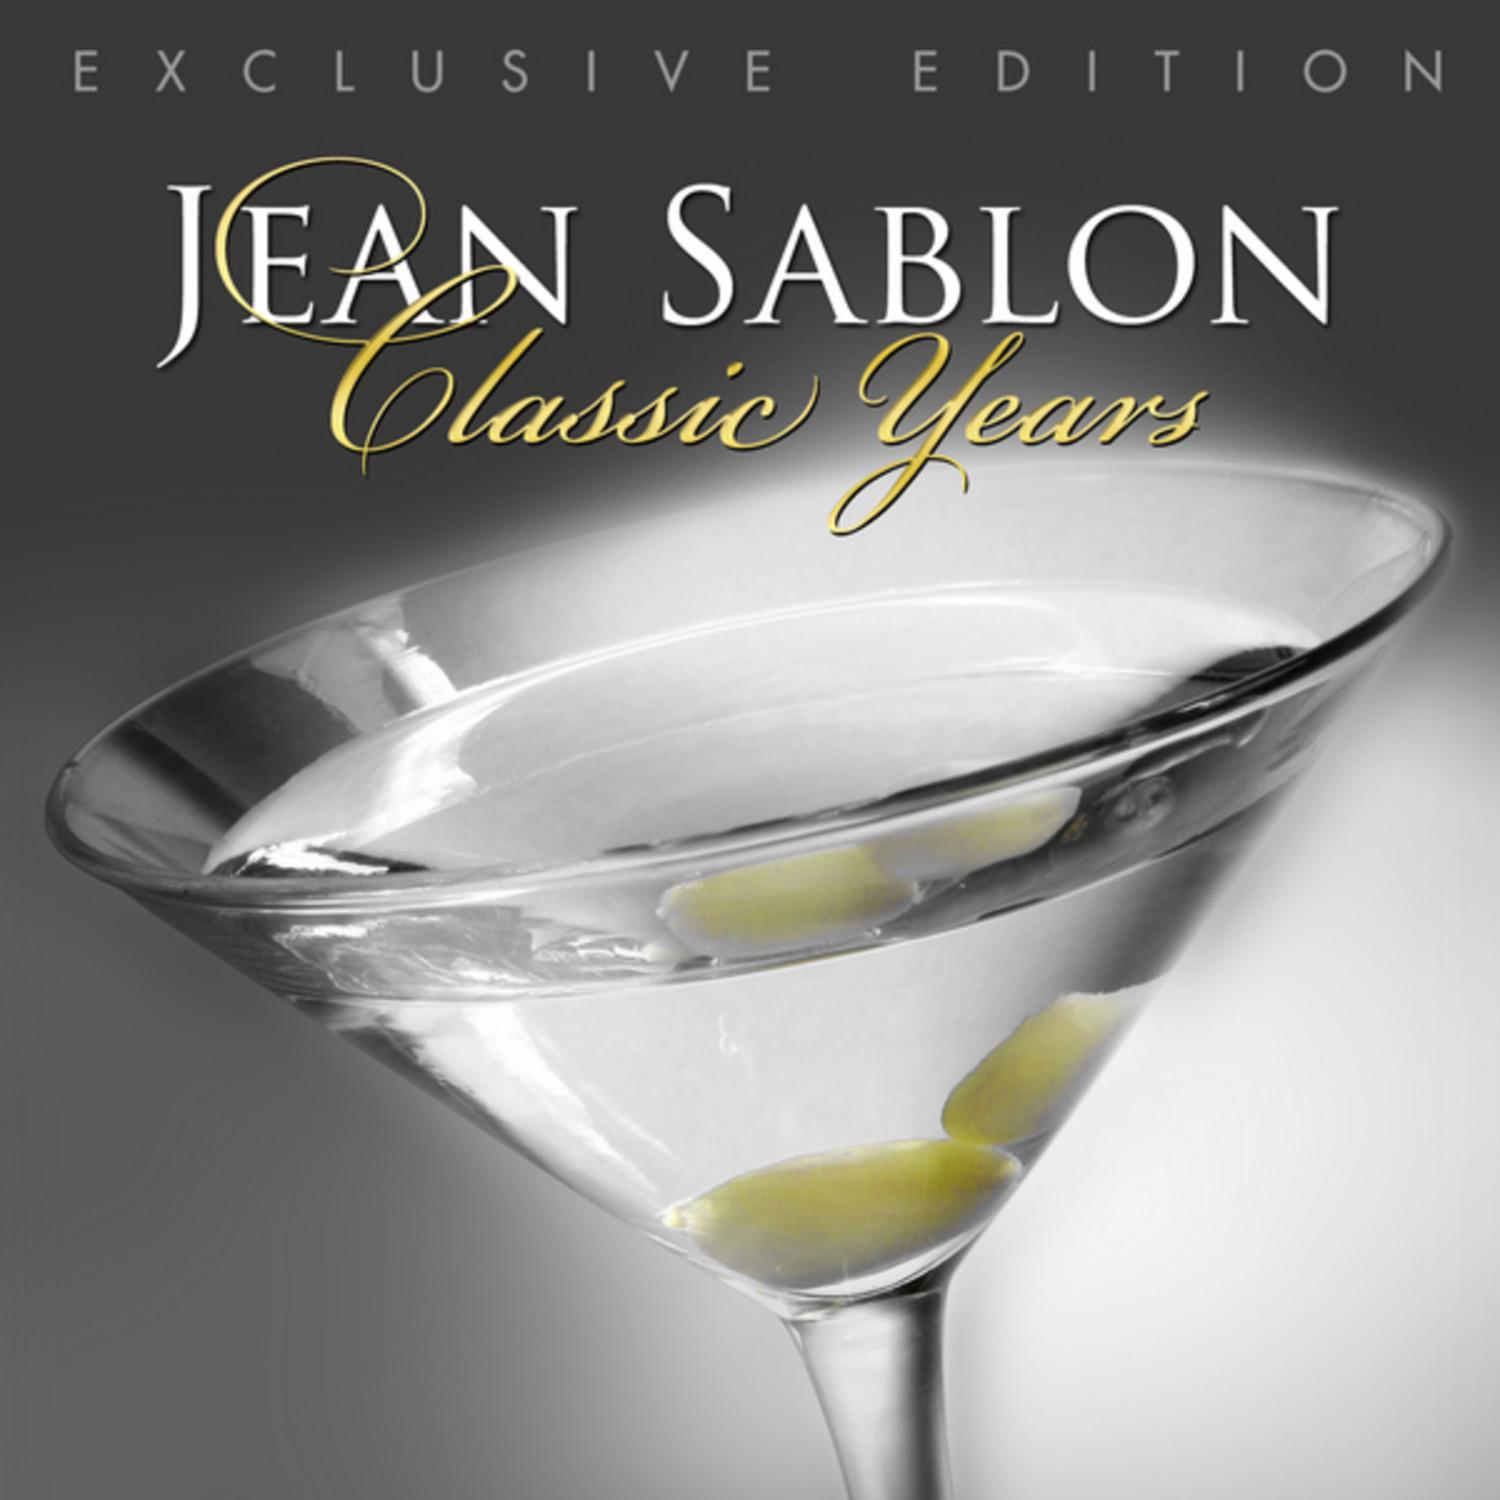 Classic Years Of Jean Sablon